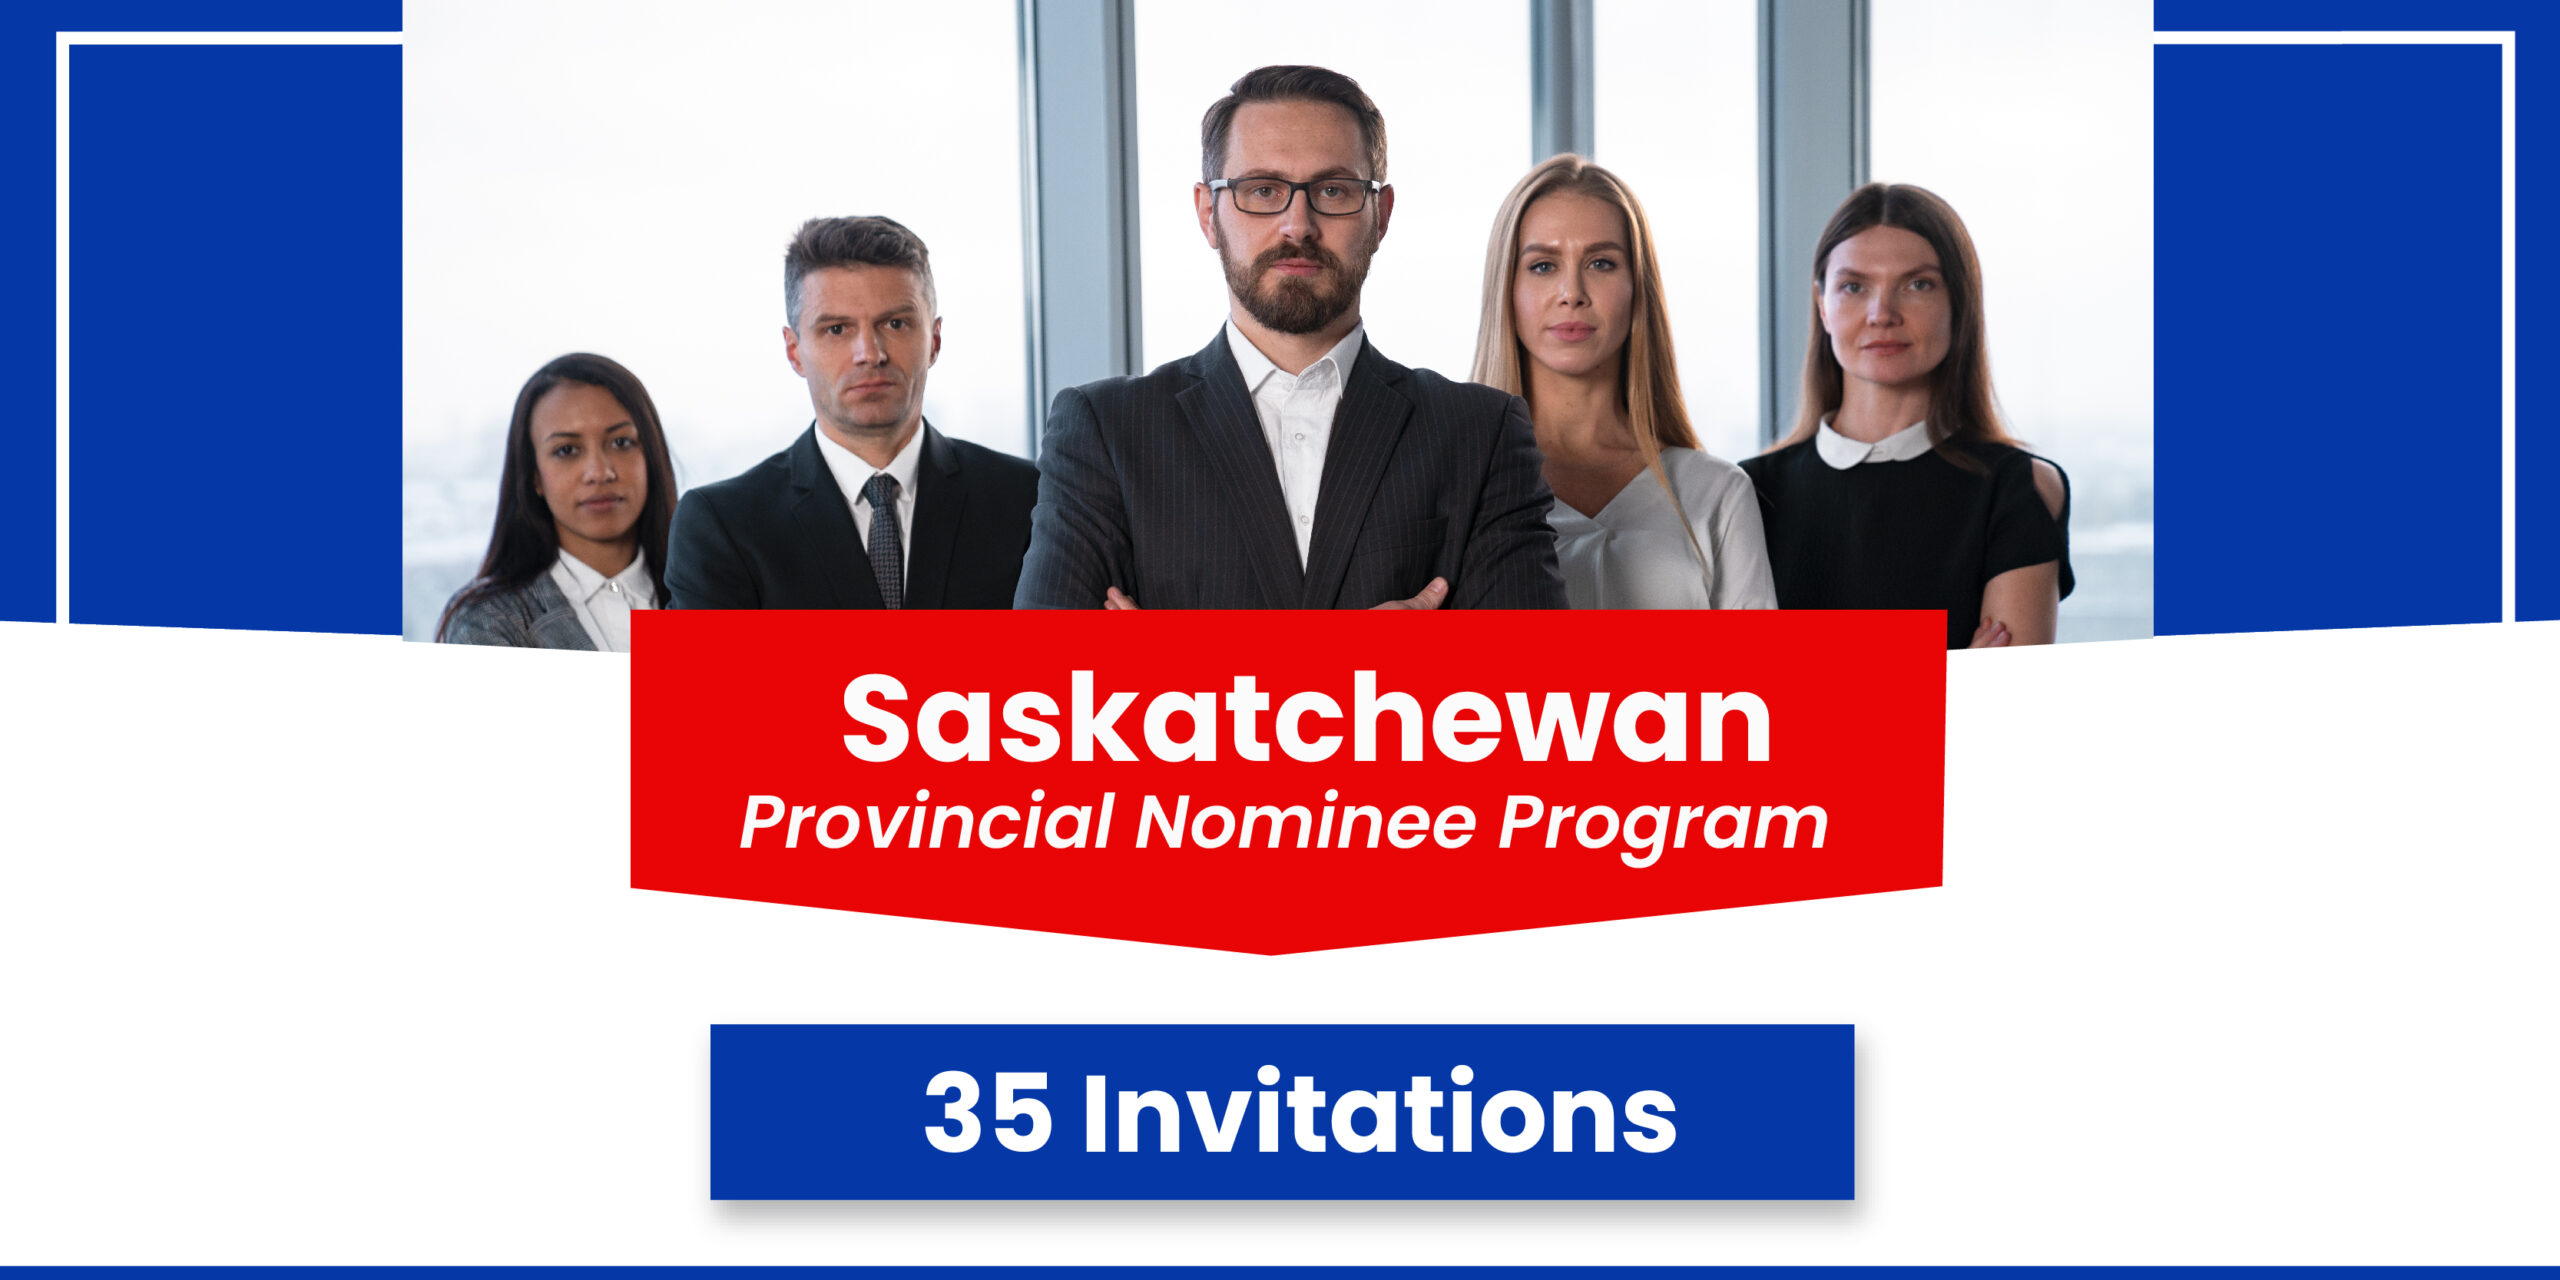 Saskatchewan's Latest PNP Draw Issues 63 ITAs